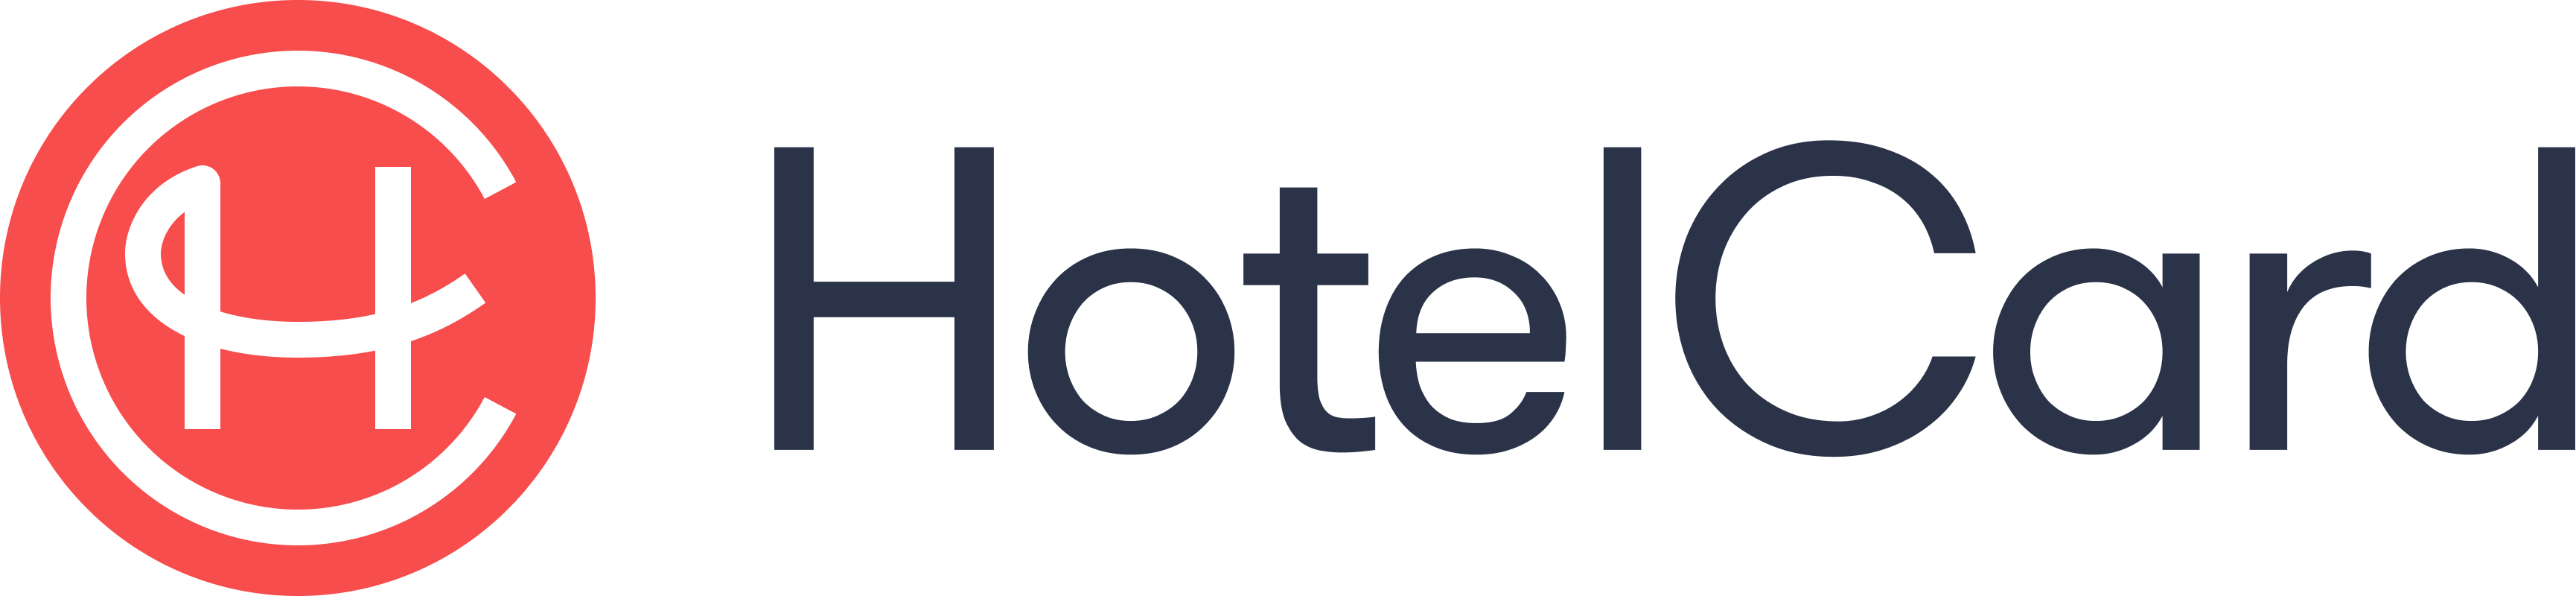 Logo hotelcard horizontal gray